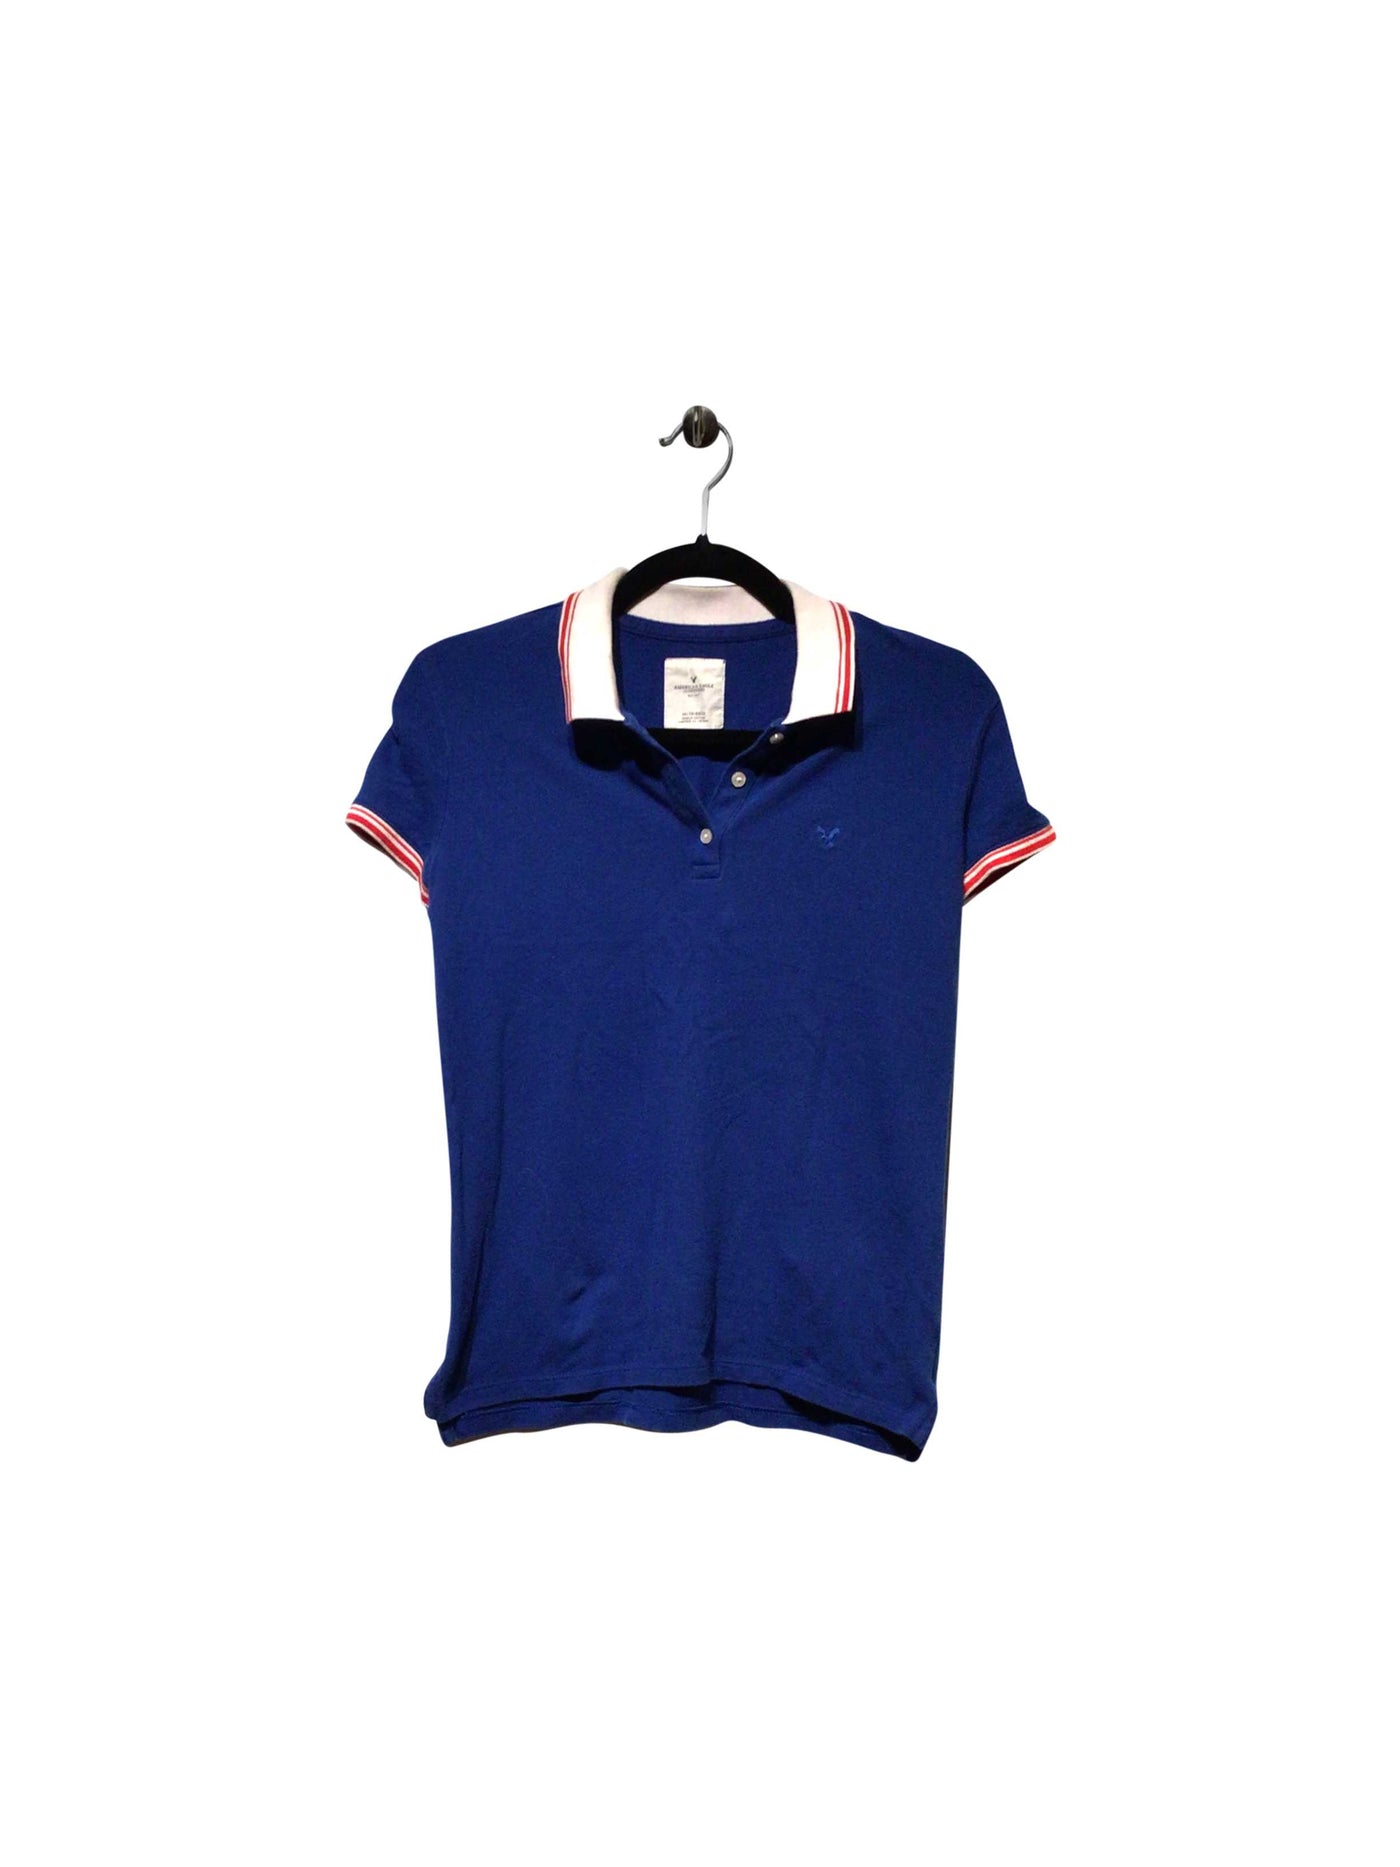 AMERICAN EAGLE Regular fit T-shirt in Blue  -  XS  7.96 Koop